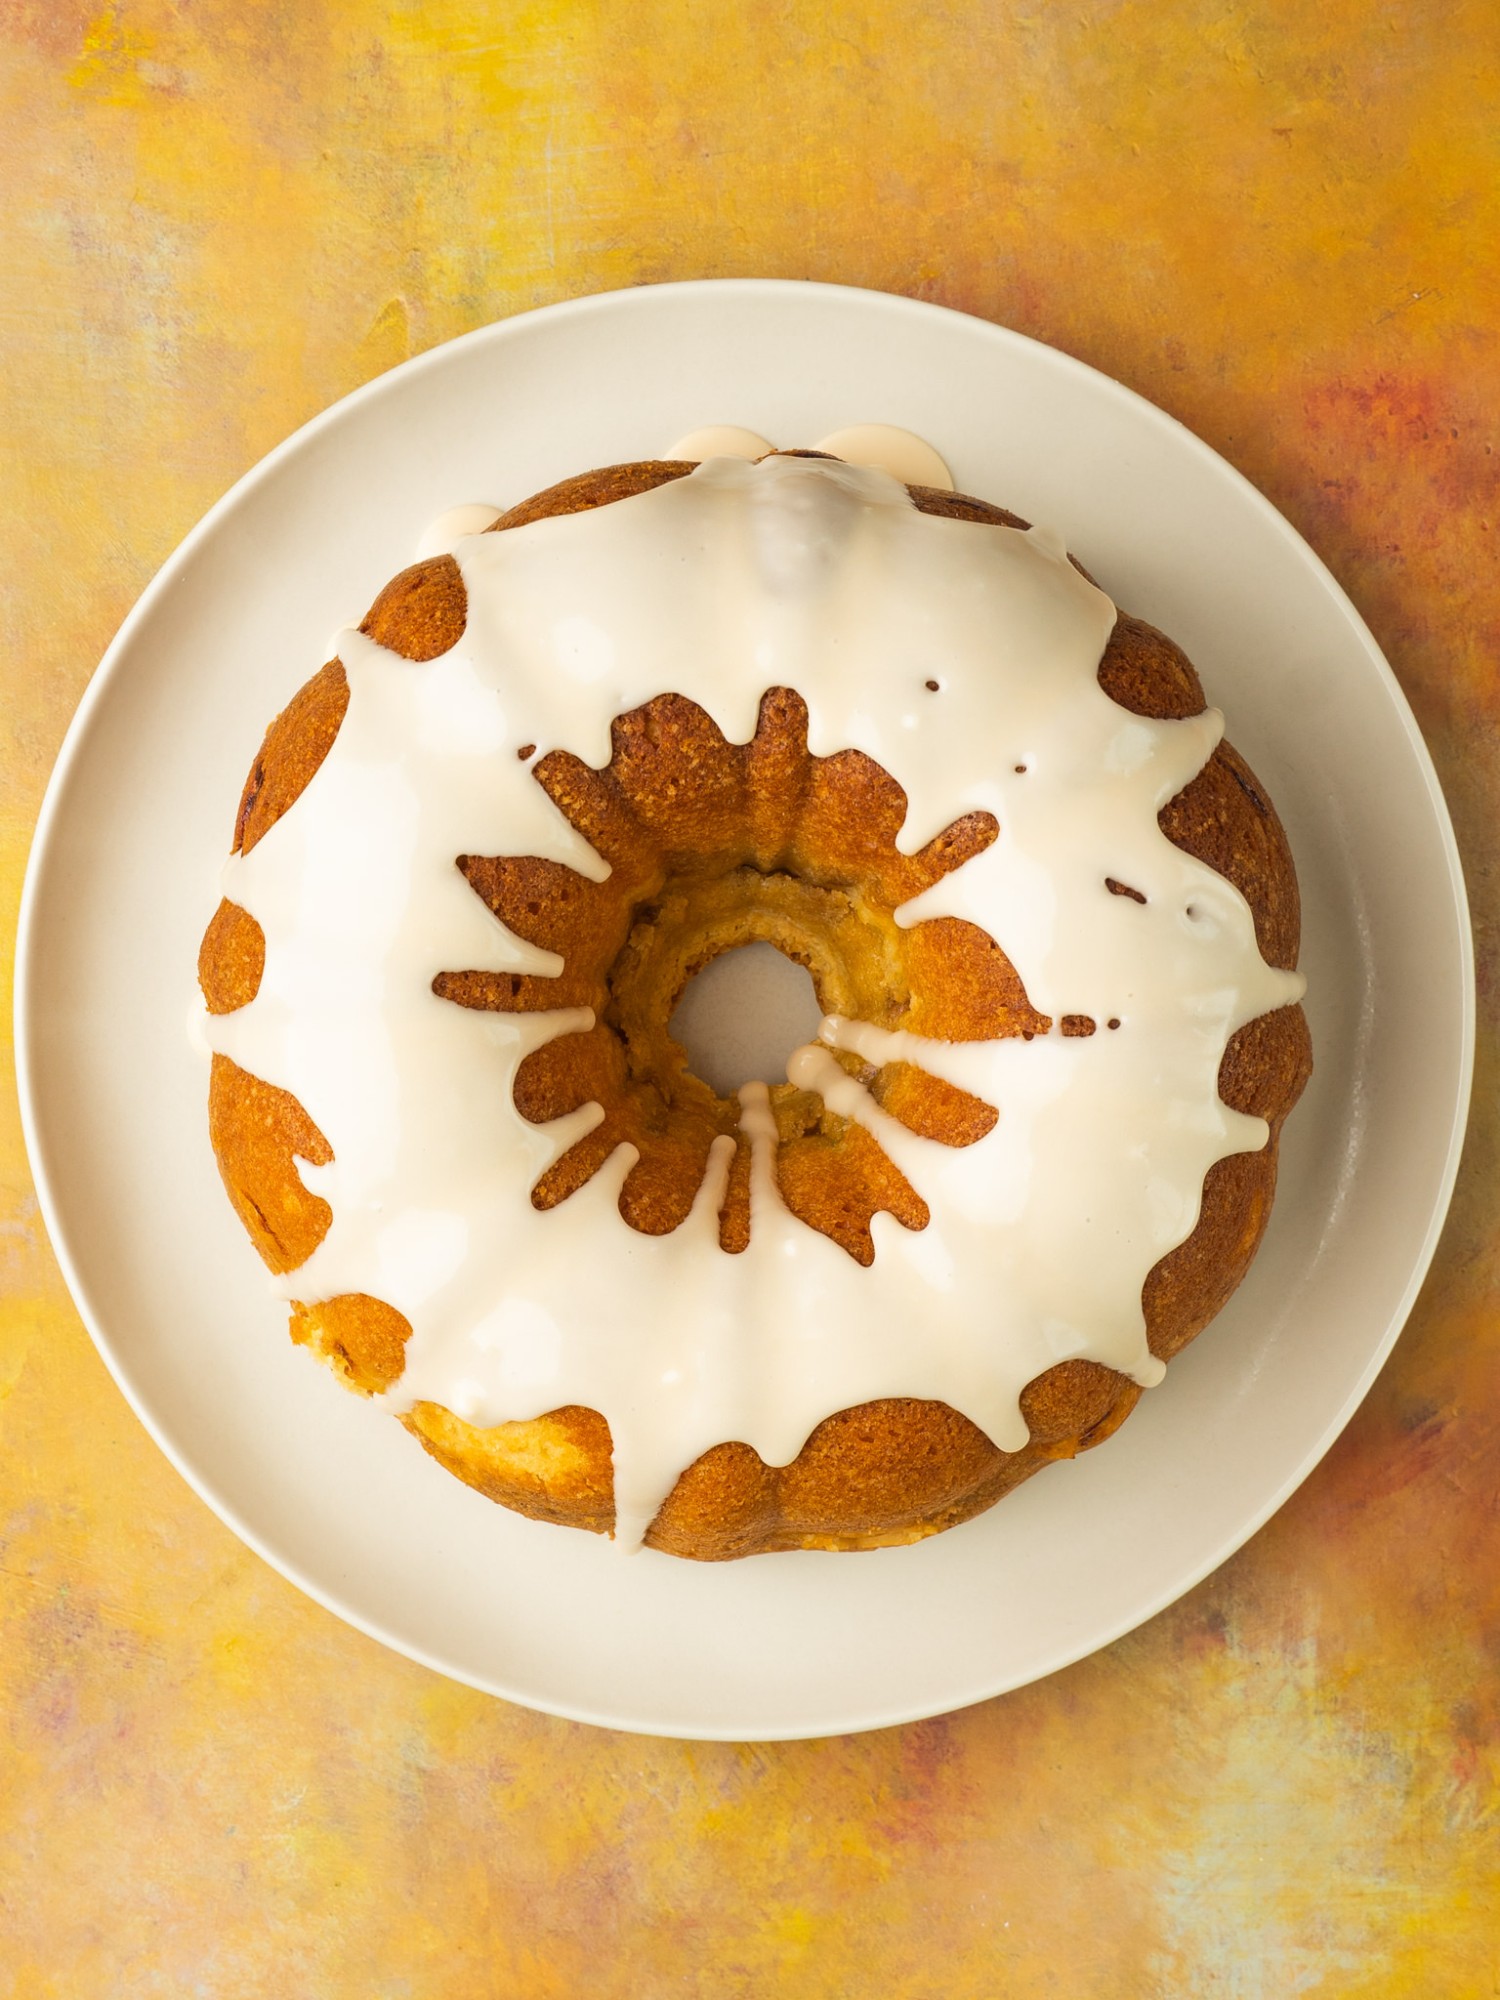 Peach cobbler pound cake topped with a glaze